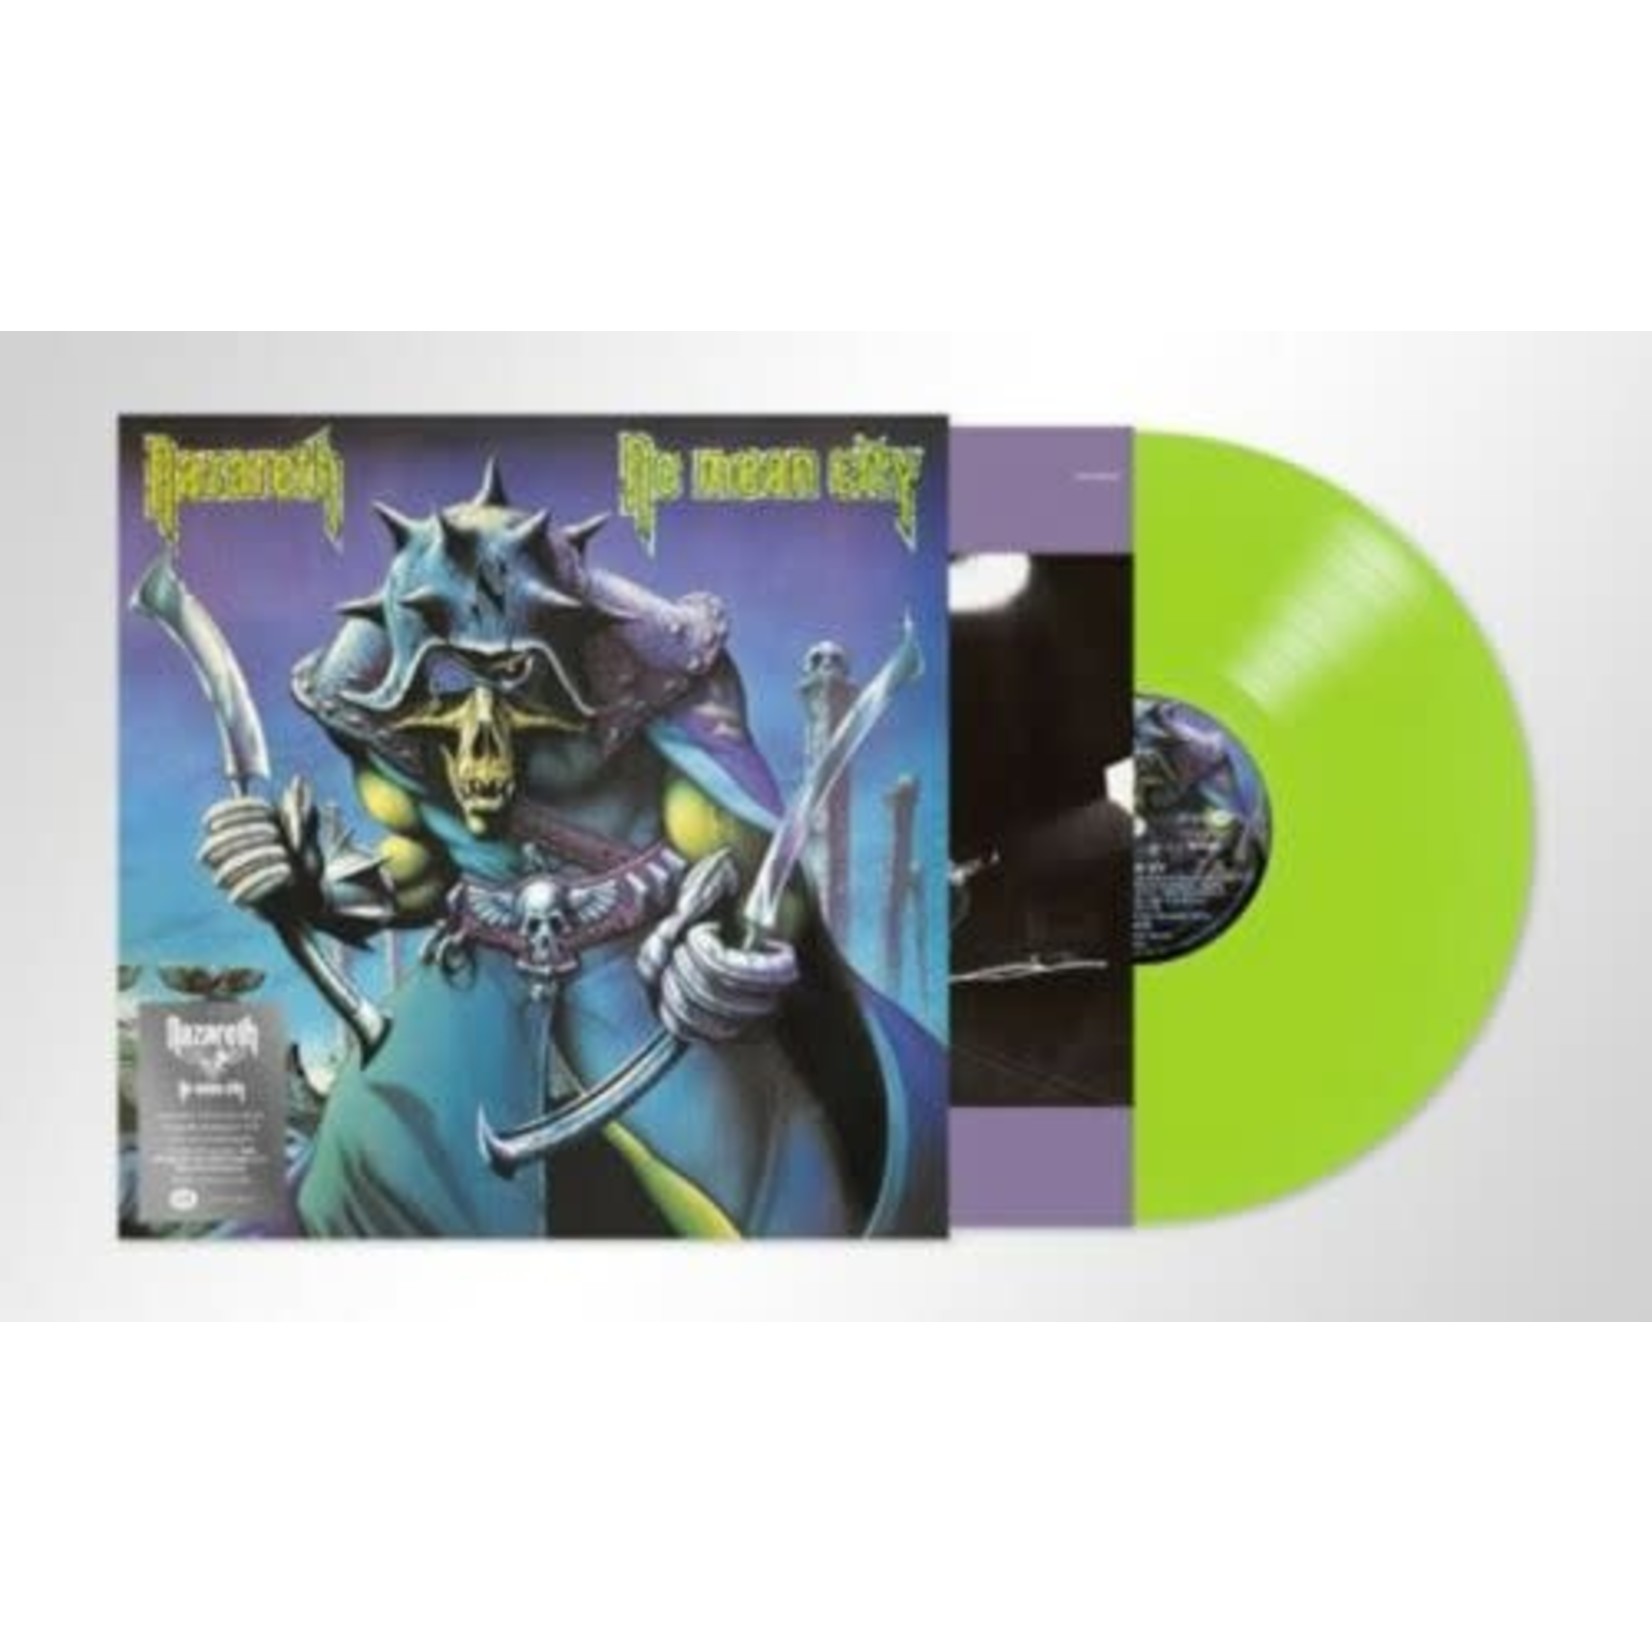 [New] Nazareth - No Mean City (green vinyl)